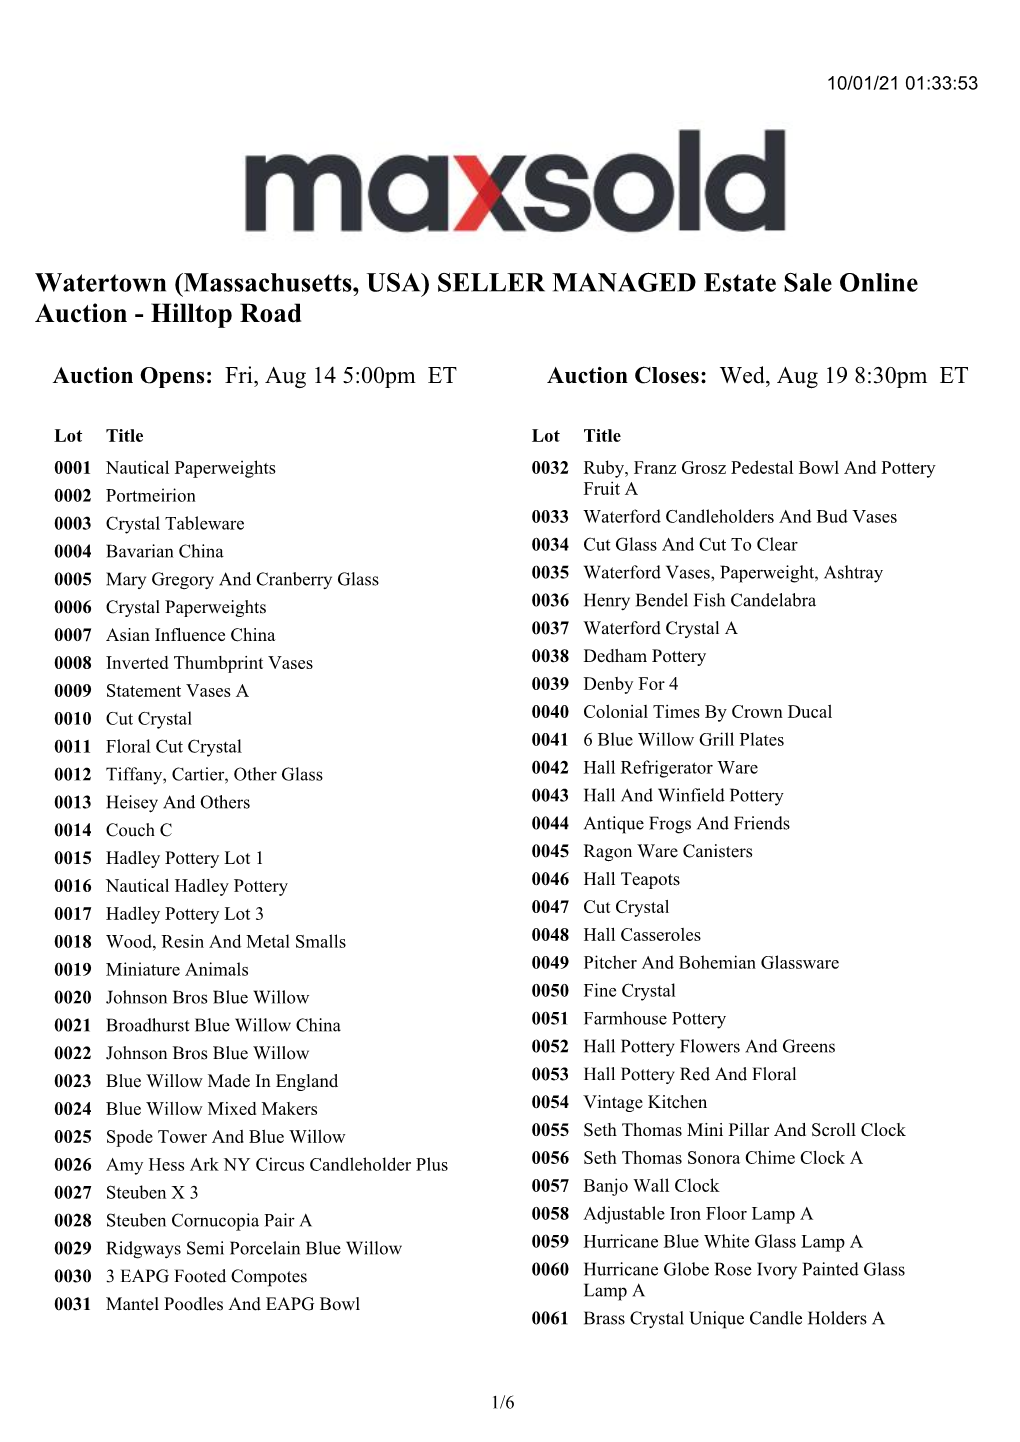 Watertown (Massachusetts, USA) SELLER MANAGED Estate Sale Online Auction - Hilltop Road